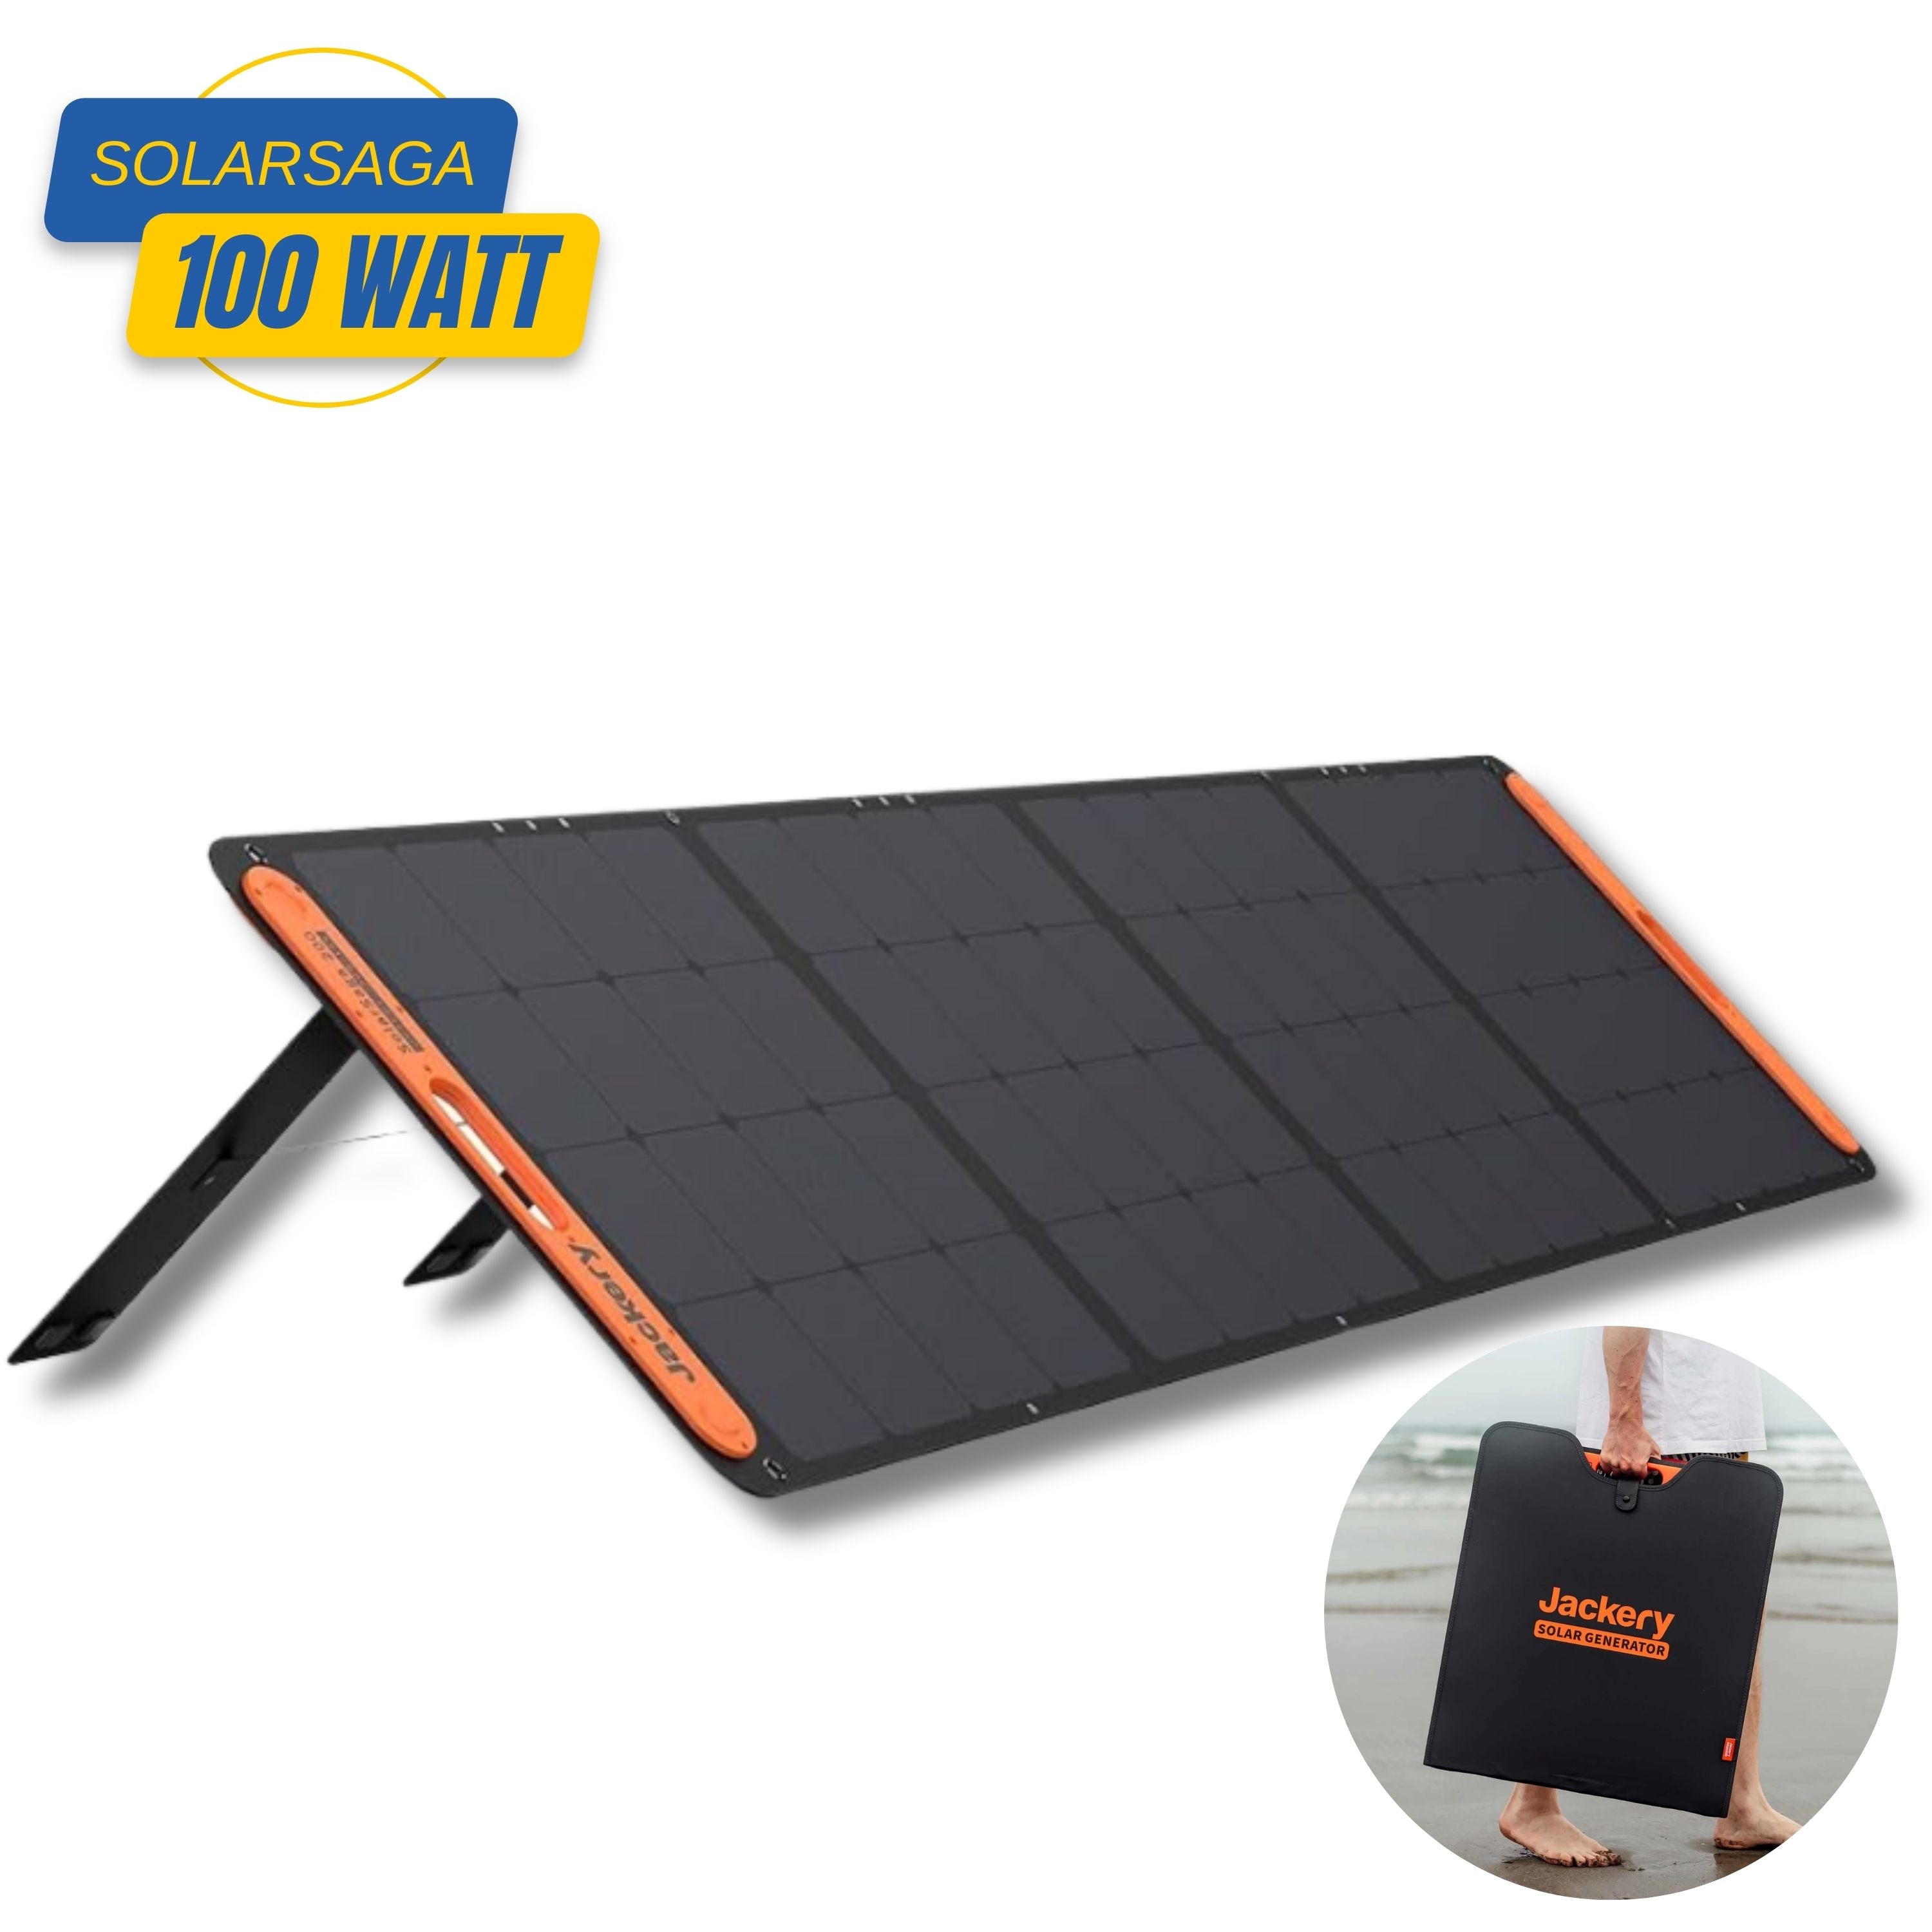 Jackery SolarSaga 200W Solarpanel für Powerstation